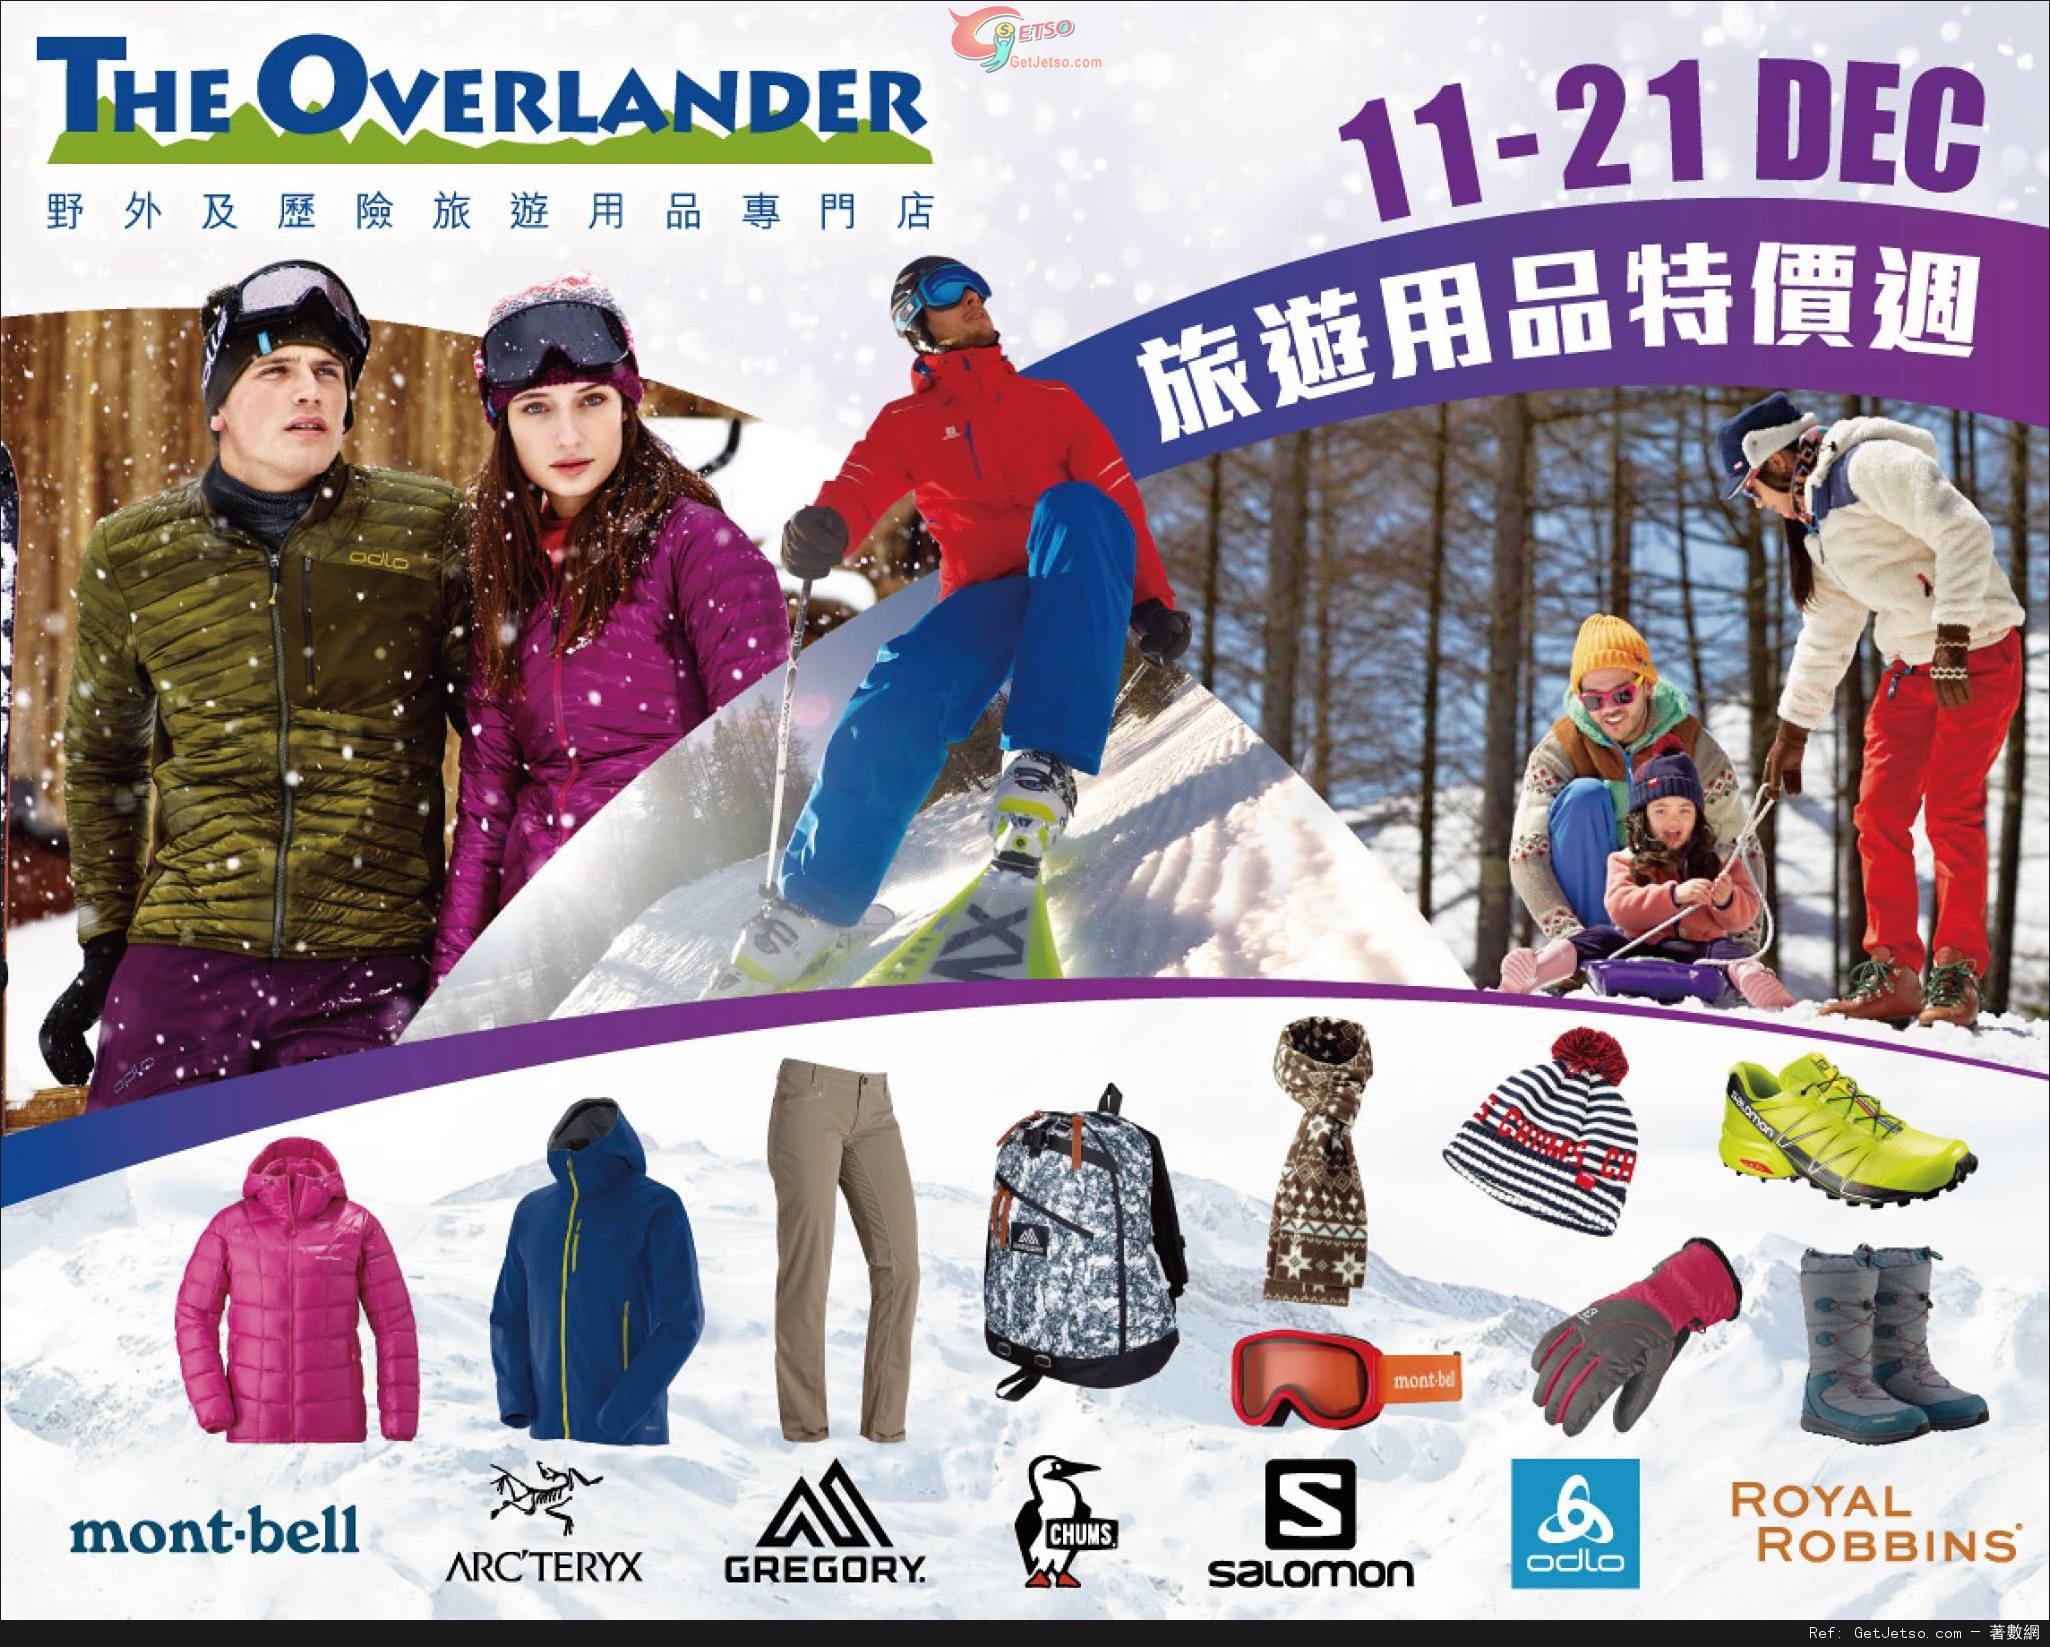 The Overlander 旅遊用品特價週購物優惠(至15年12月21日)圖片1